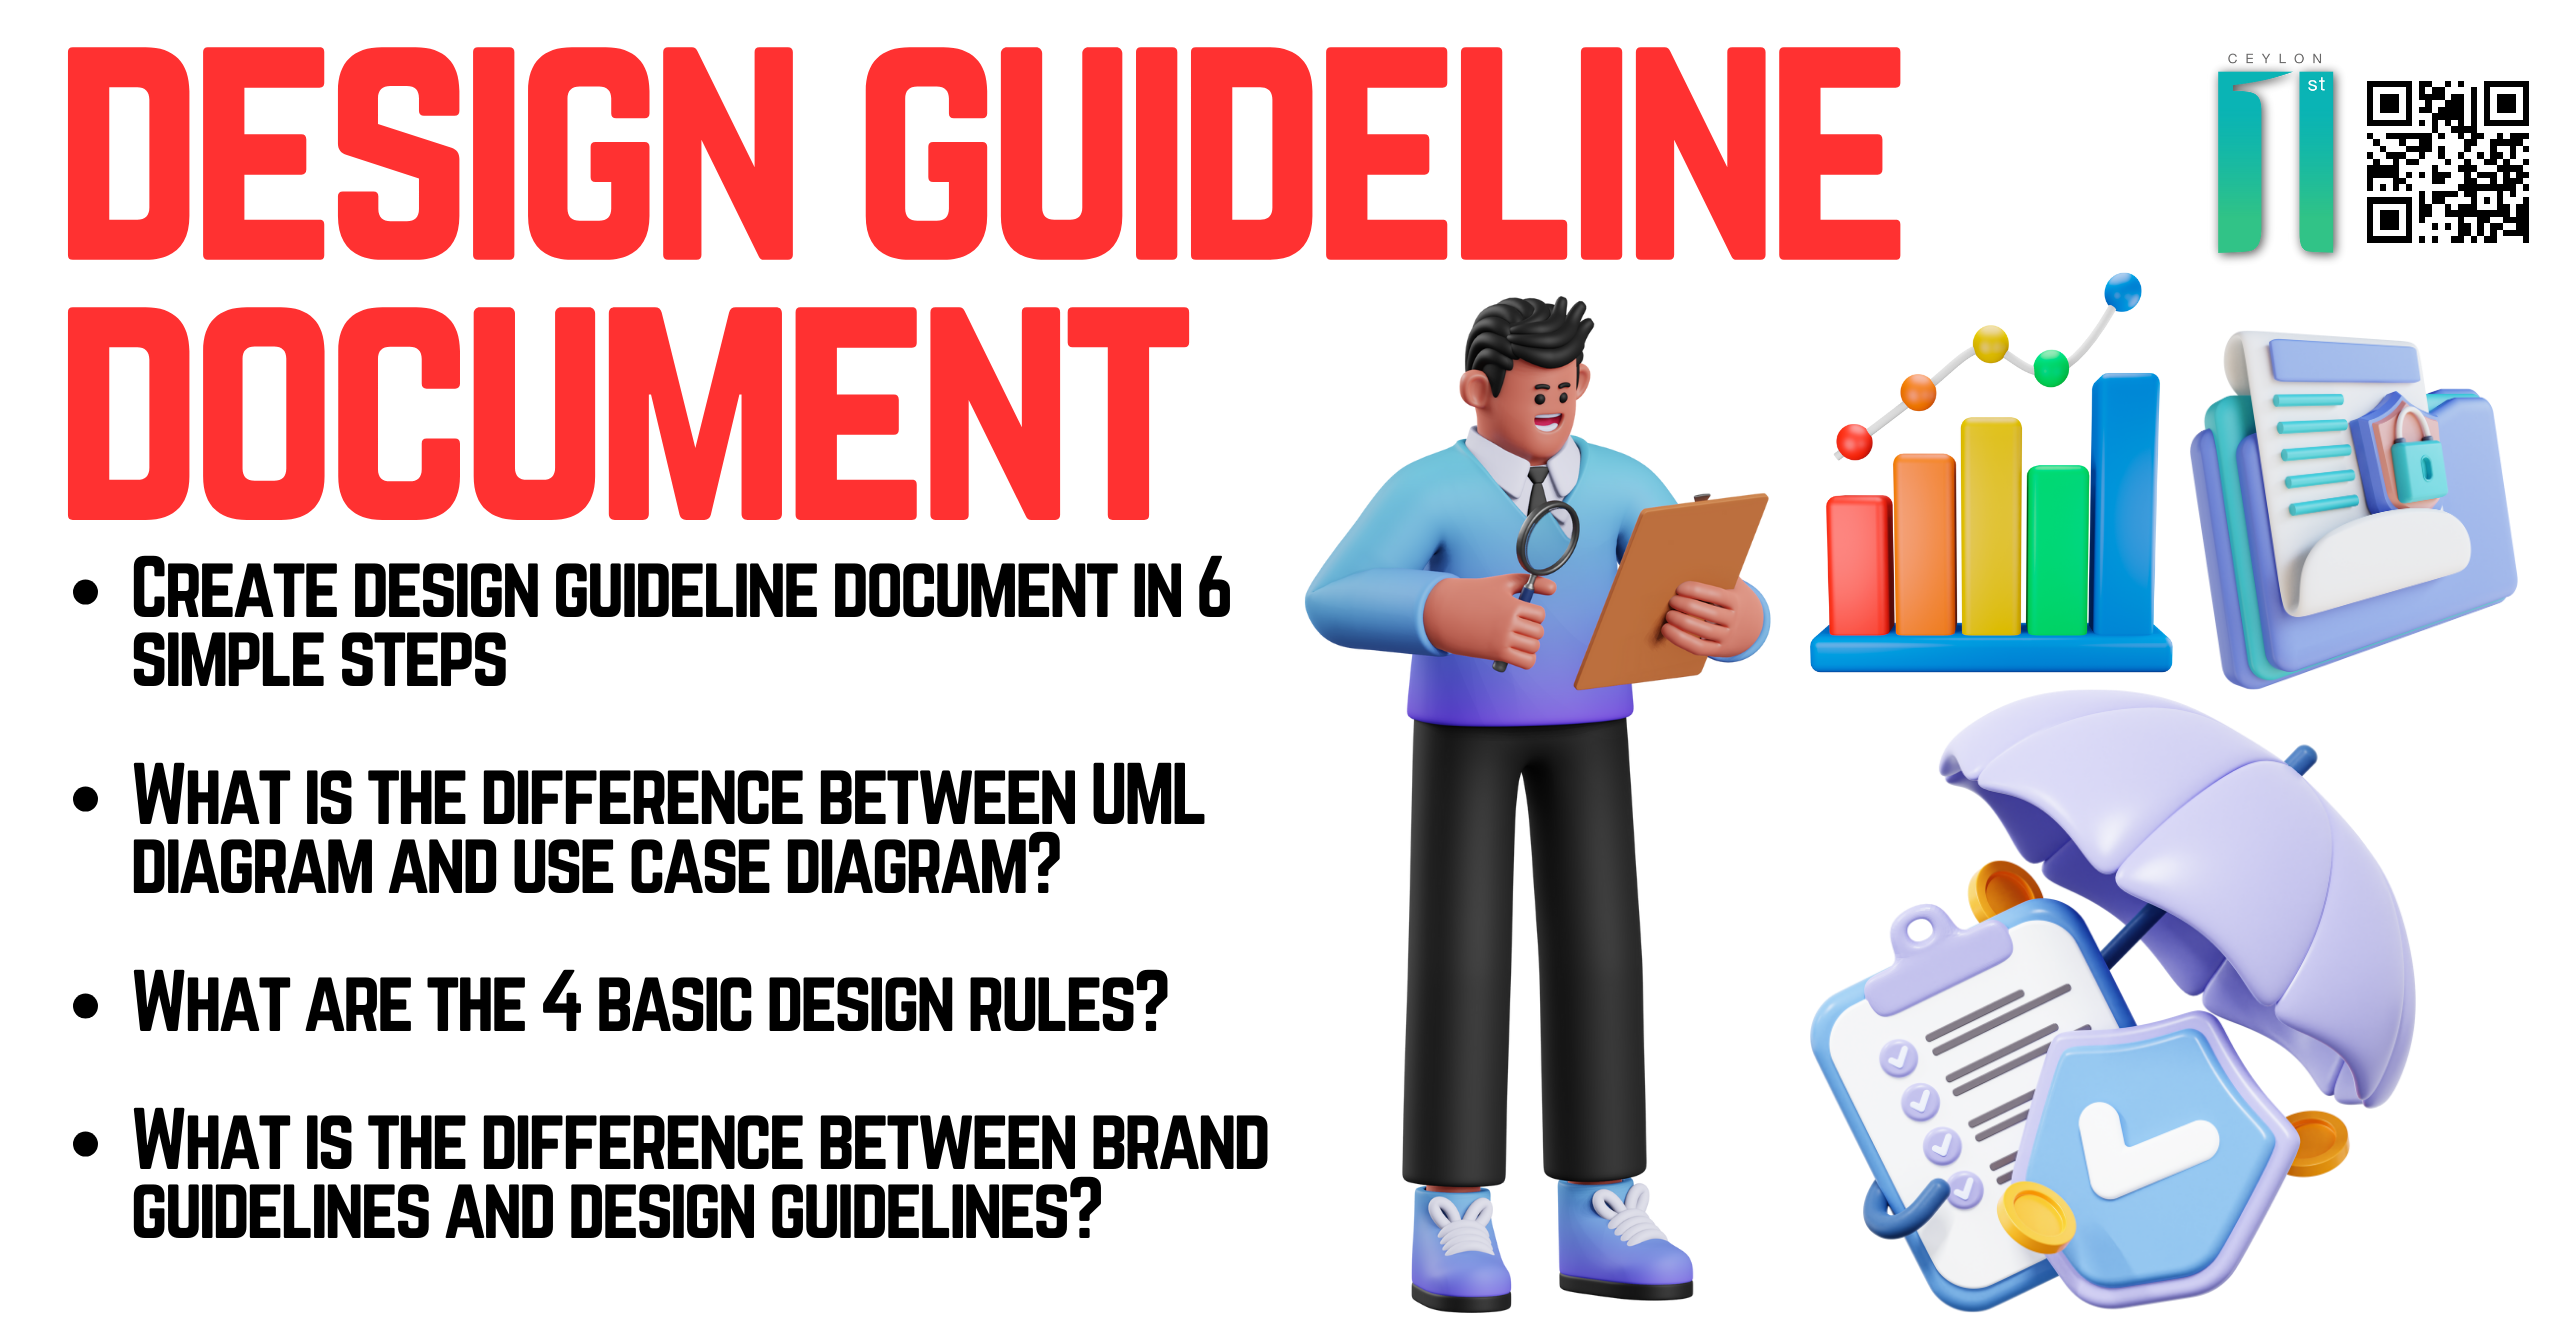 Design Guideline Document